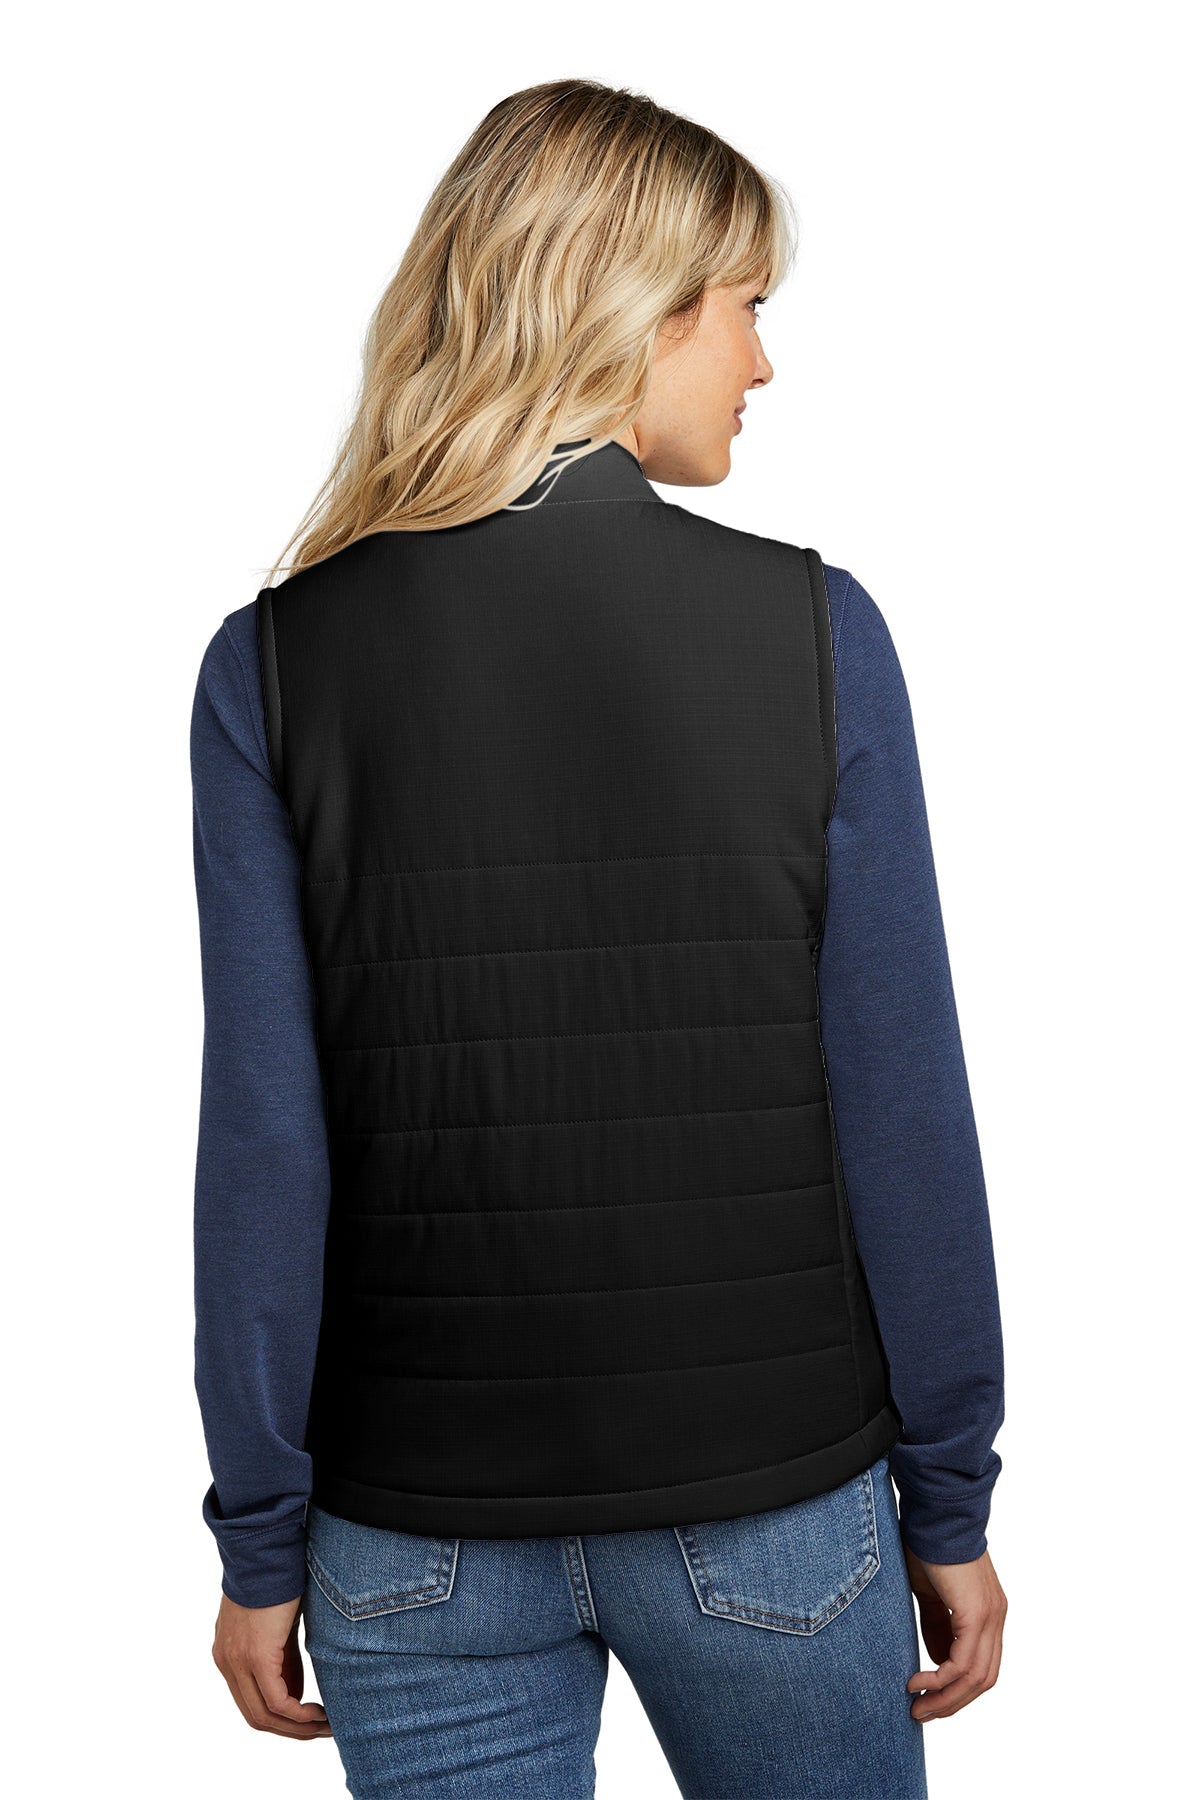 TravisMathew Ladies Cold Bay Custom Vests, Black